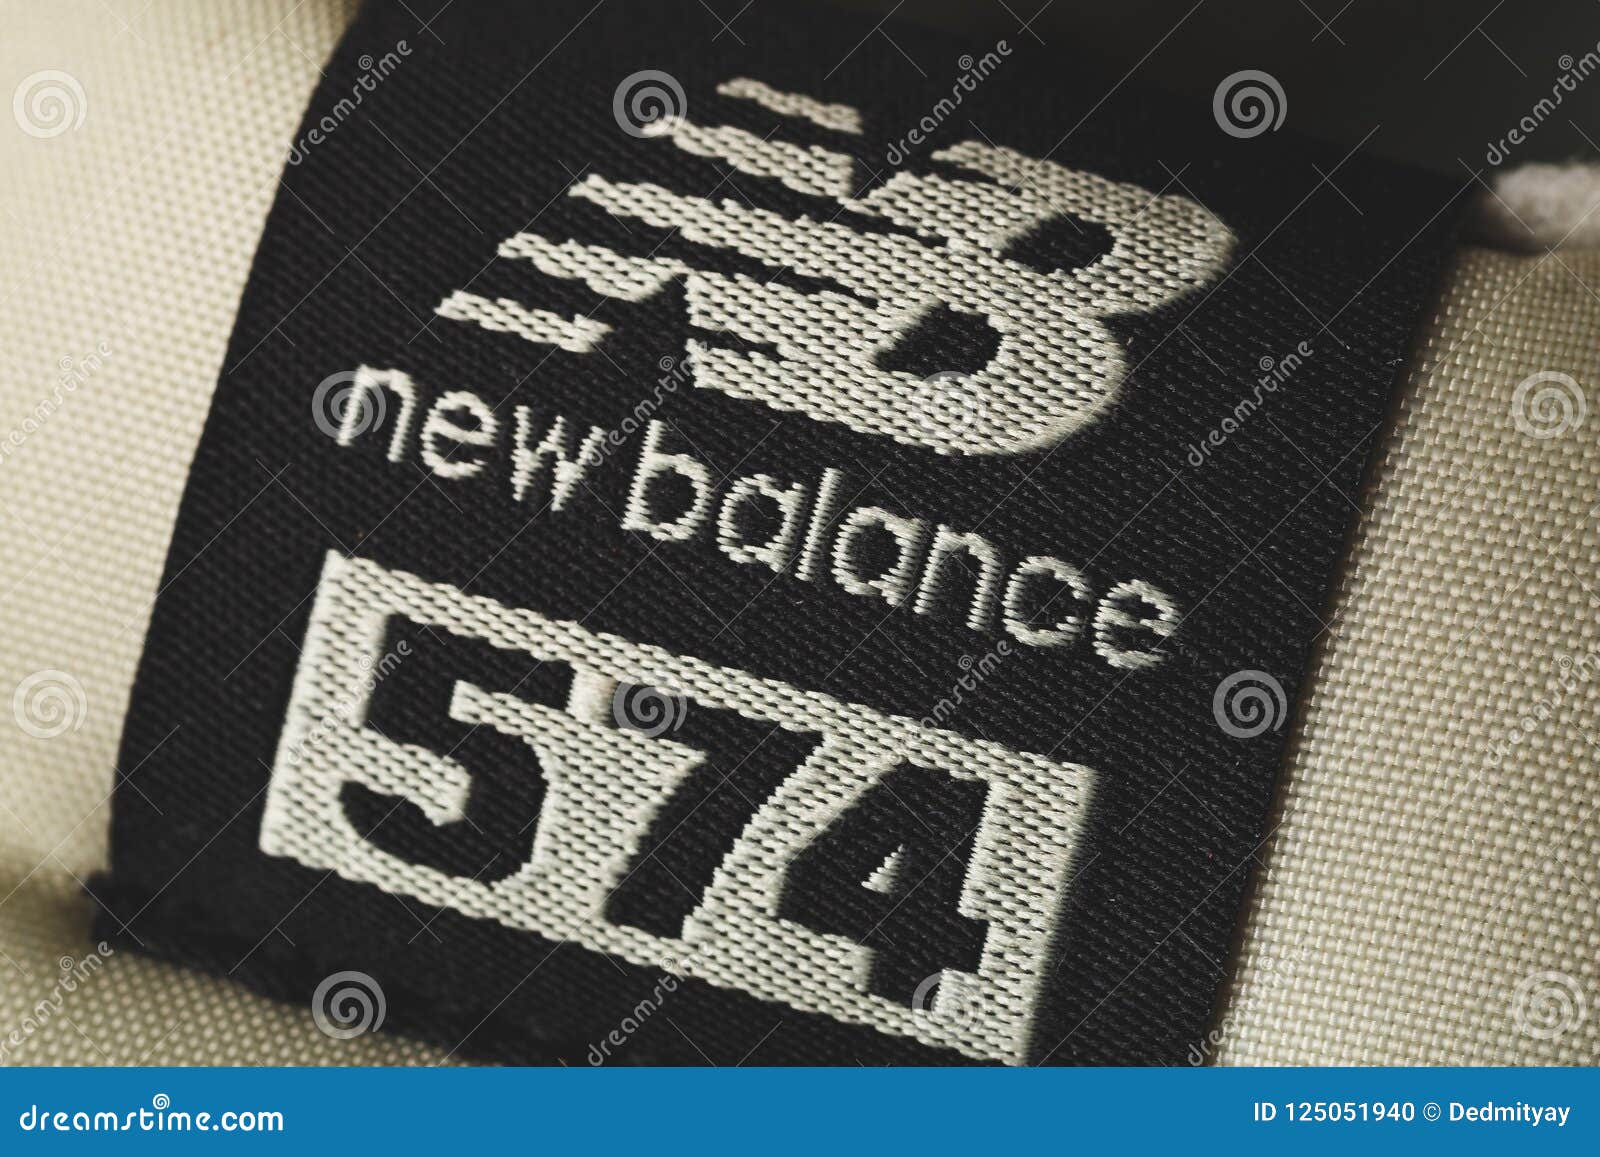 new balance 574 woven logo